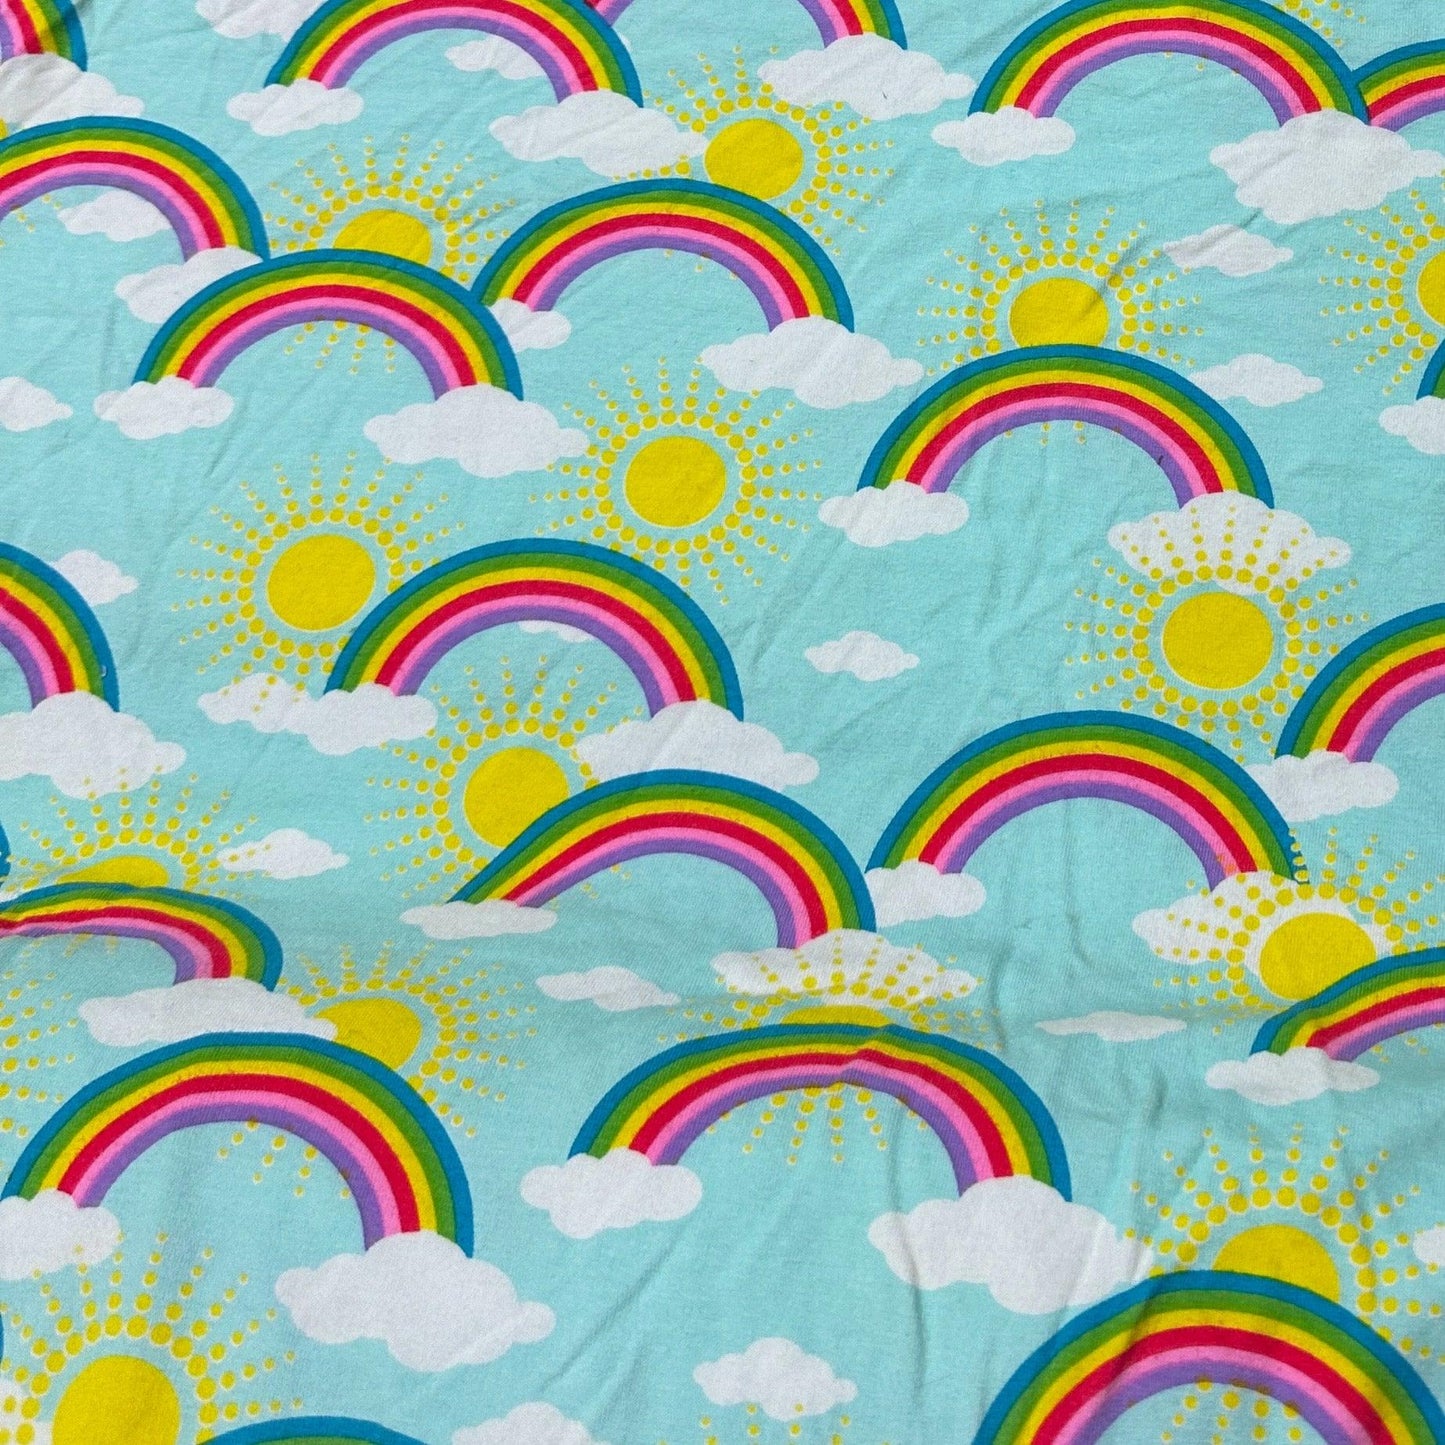 Rainbows and Sun on Cotton/Spandex Jersey Fabric - Nature's Fabrics